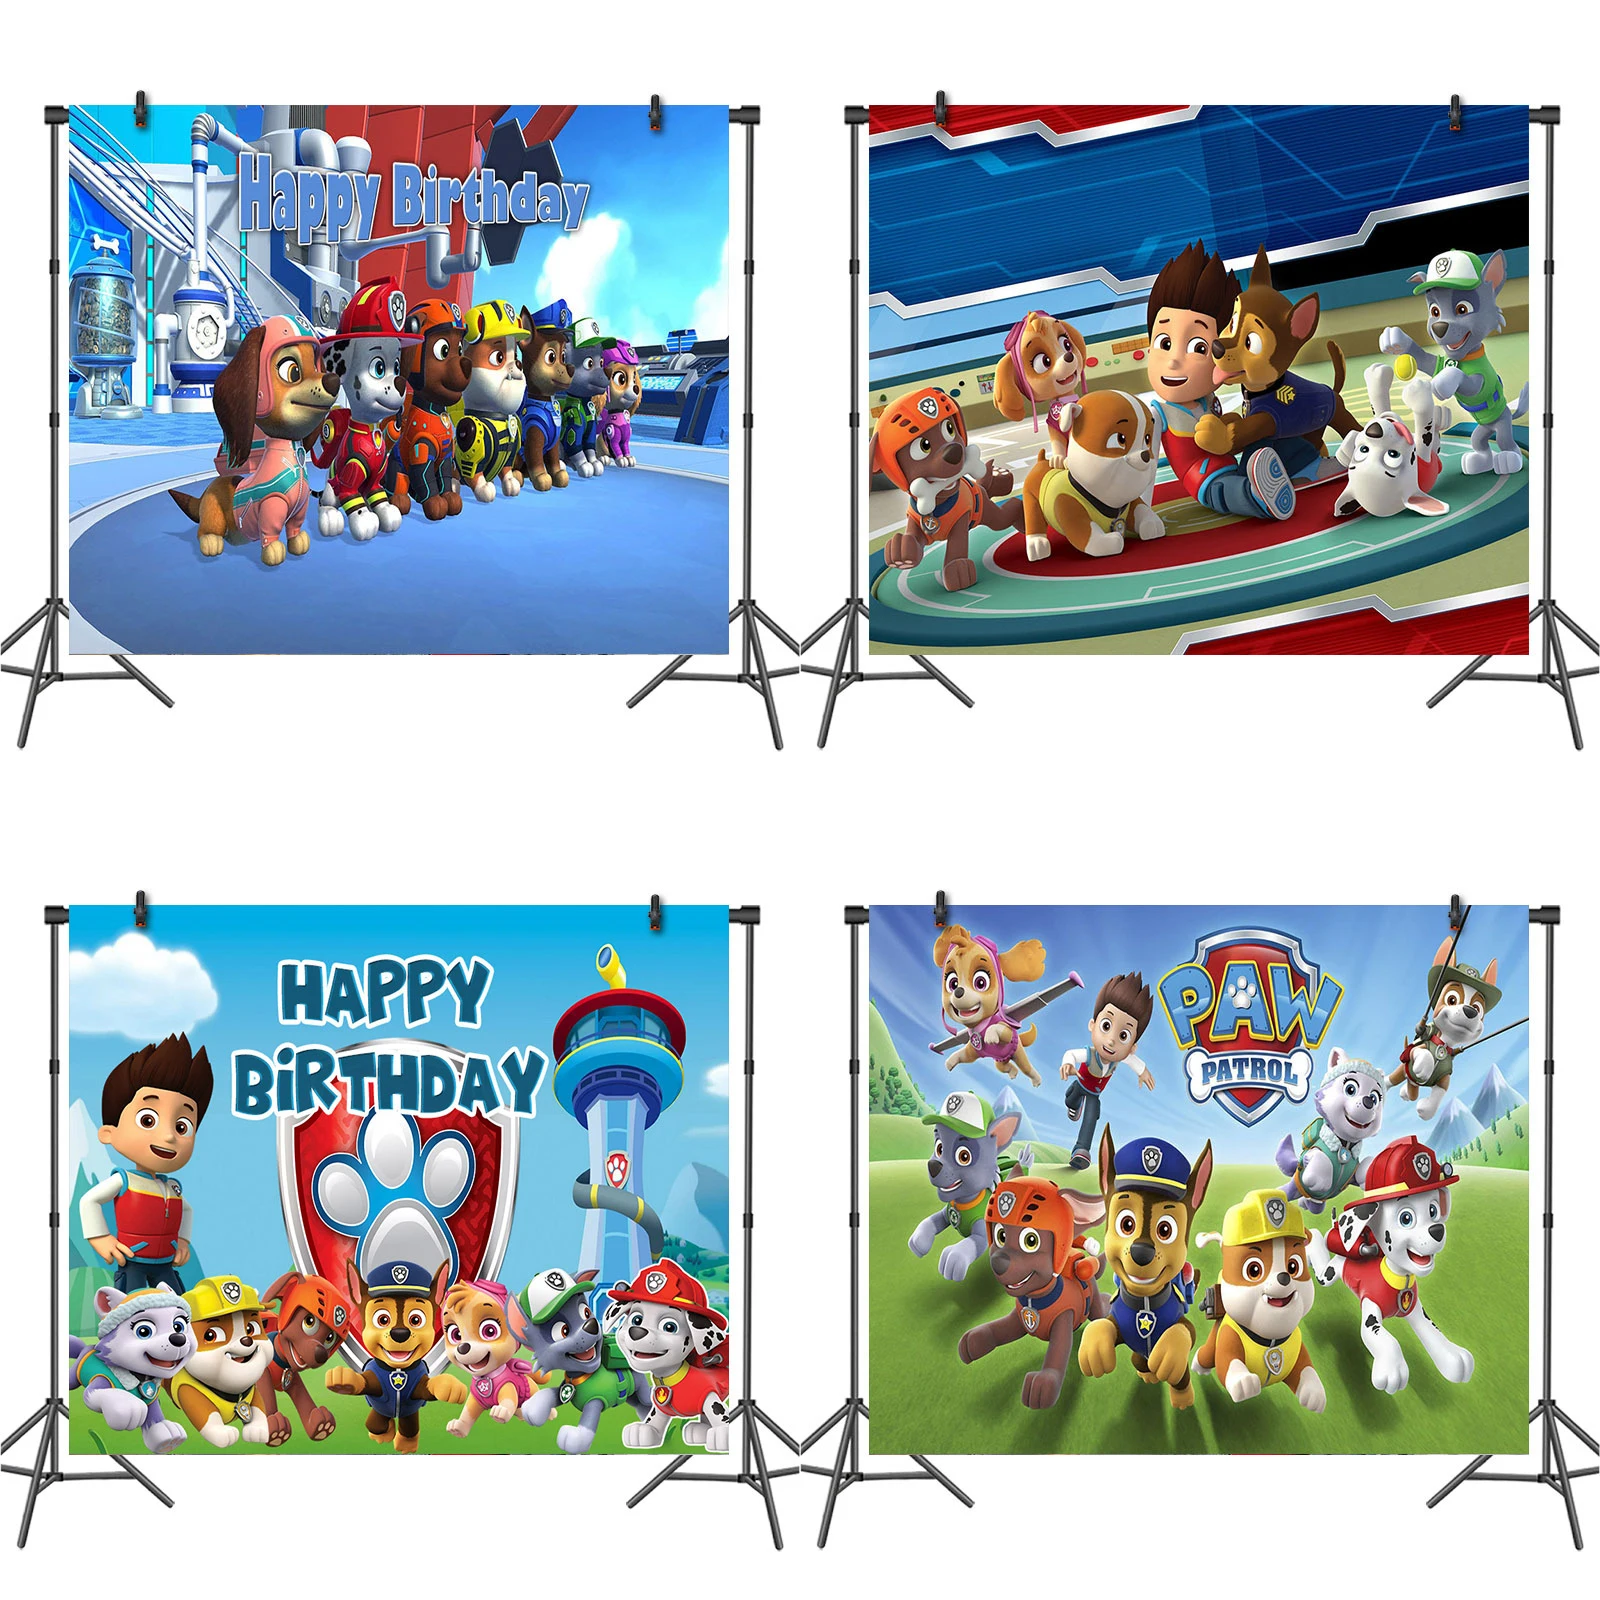 

125x80cm Paw Patrol Party Birthday Background Decoration Supplies Ryder Chase Marshall Cartoon Anime Figures Kids Theme Birthday